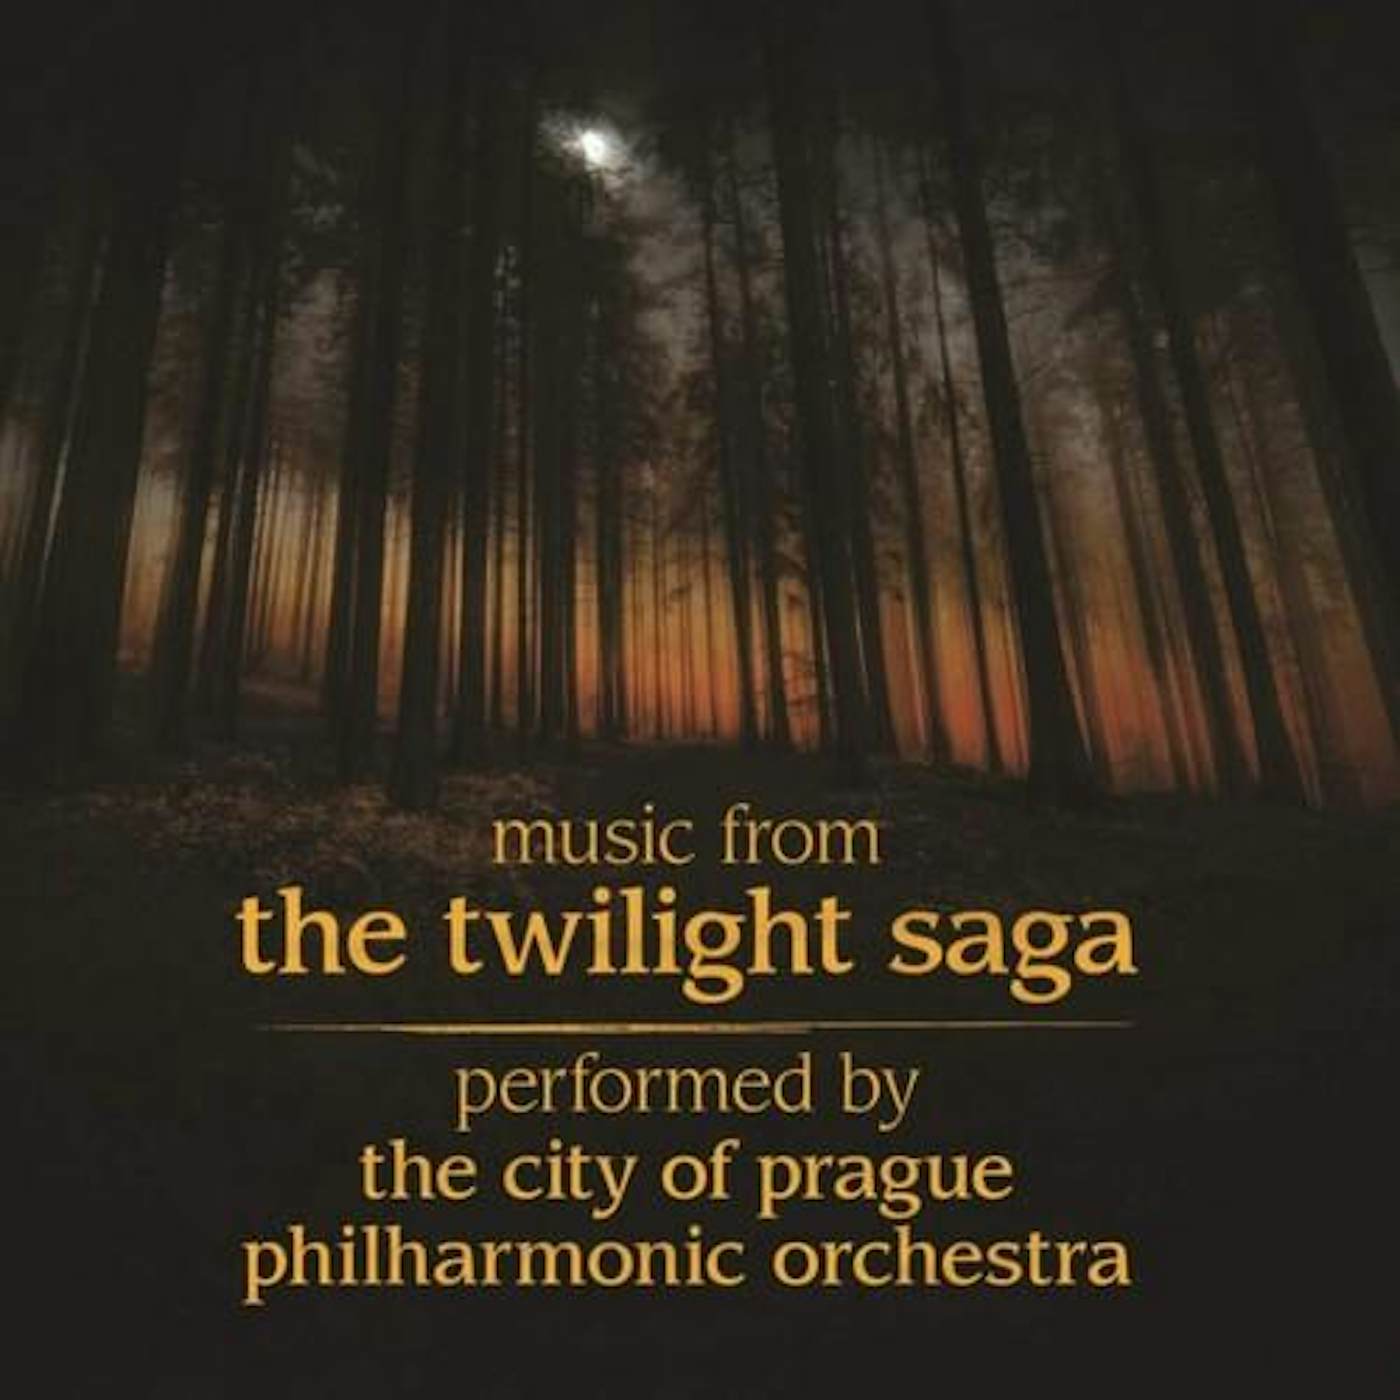 The City of Prague Philharmonic Orchestra Music From The Twilight Saga Vinyl Record